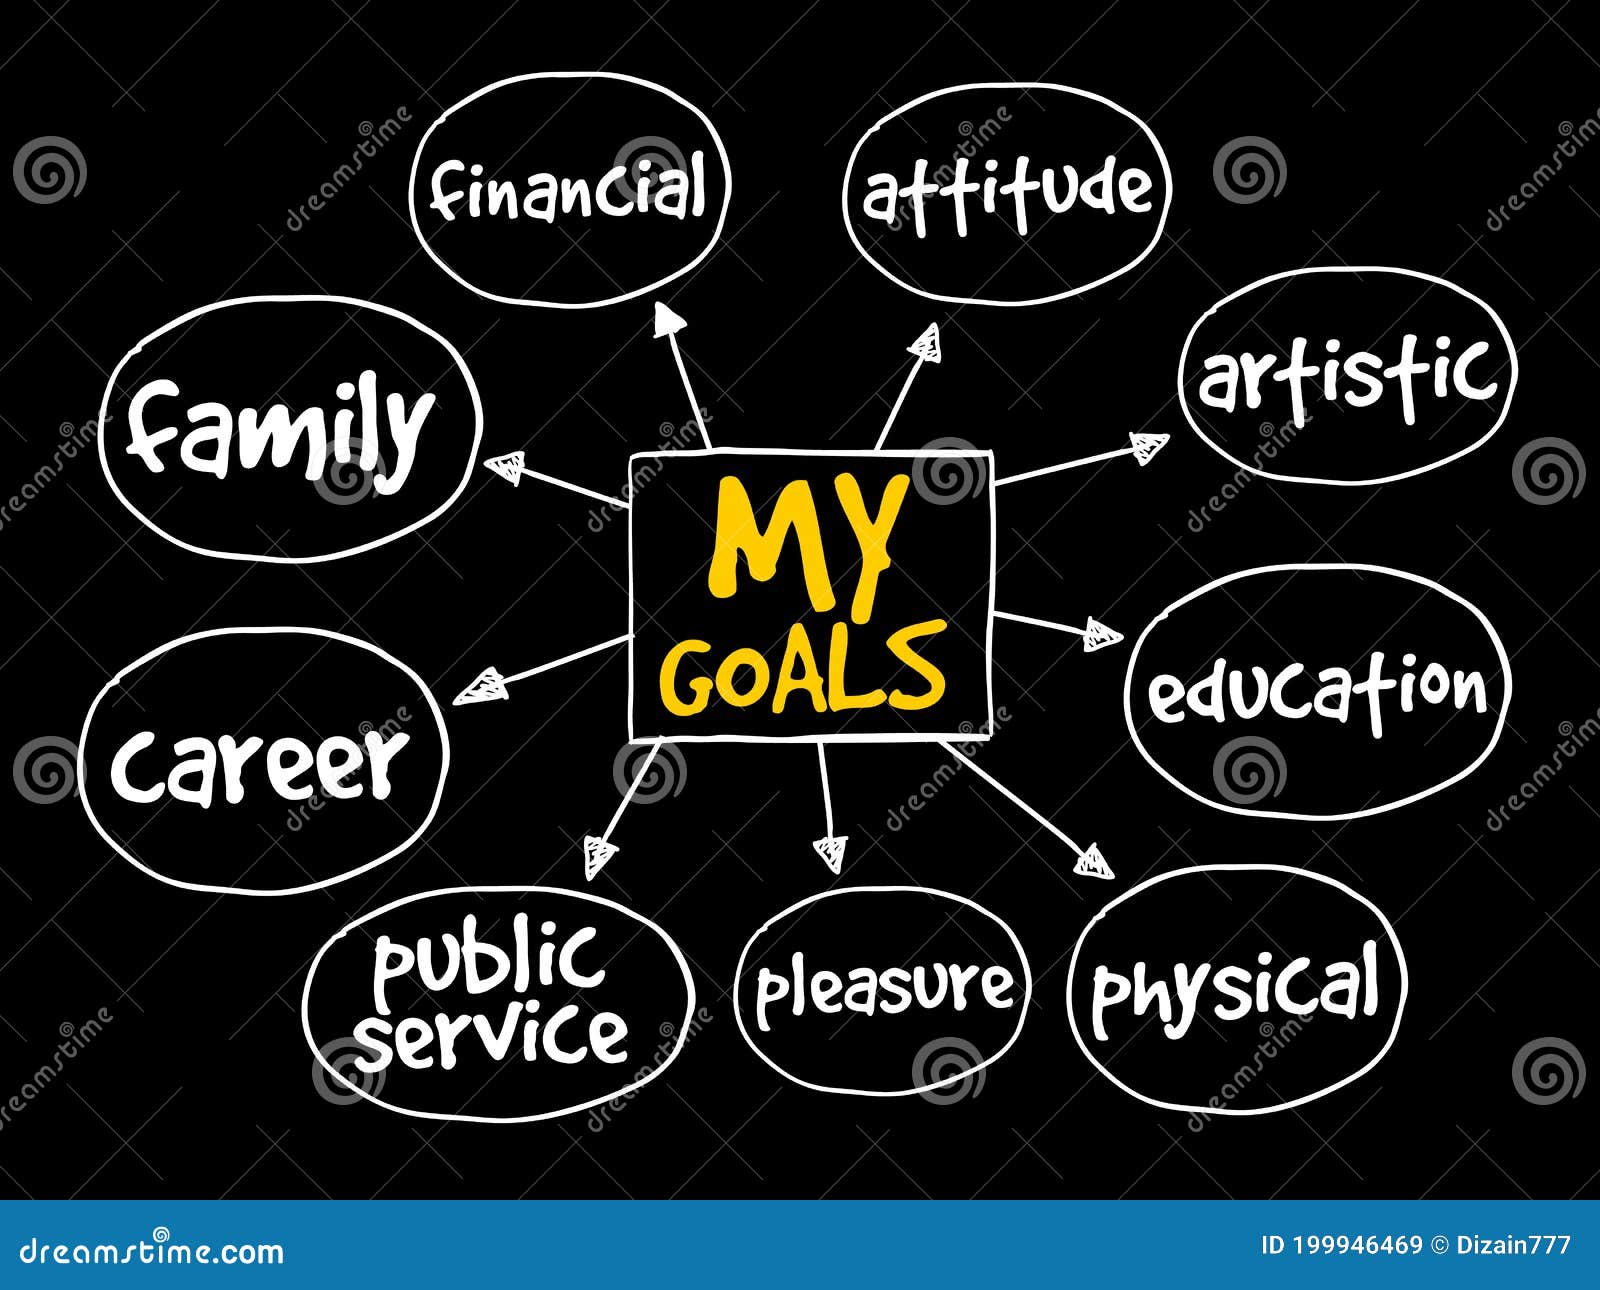 My Goals mind map stock illustration. Illustration of flowchart - 199946469